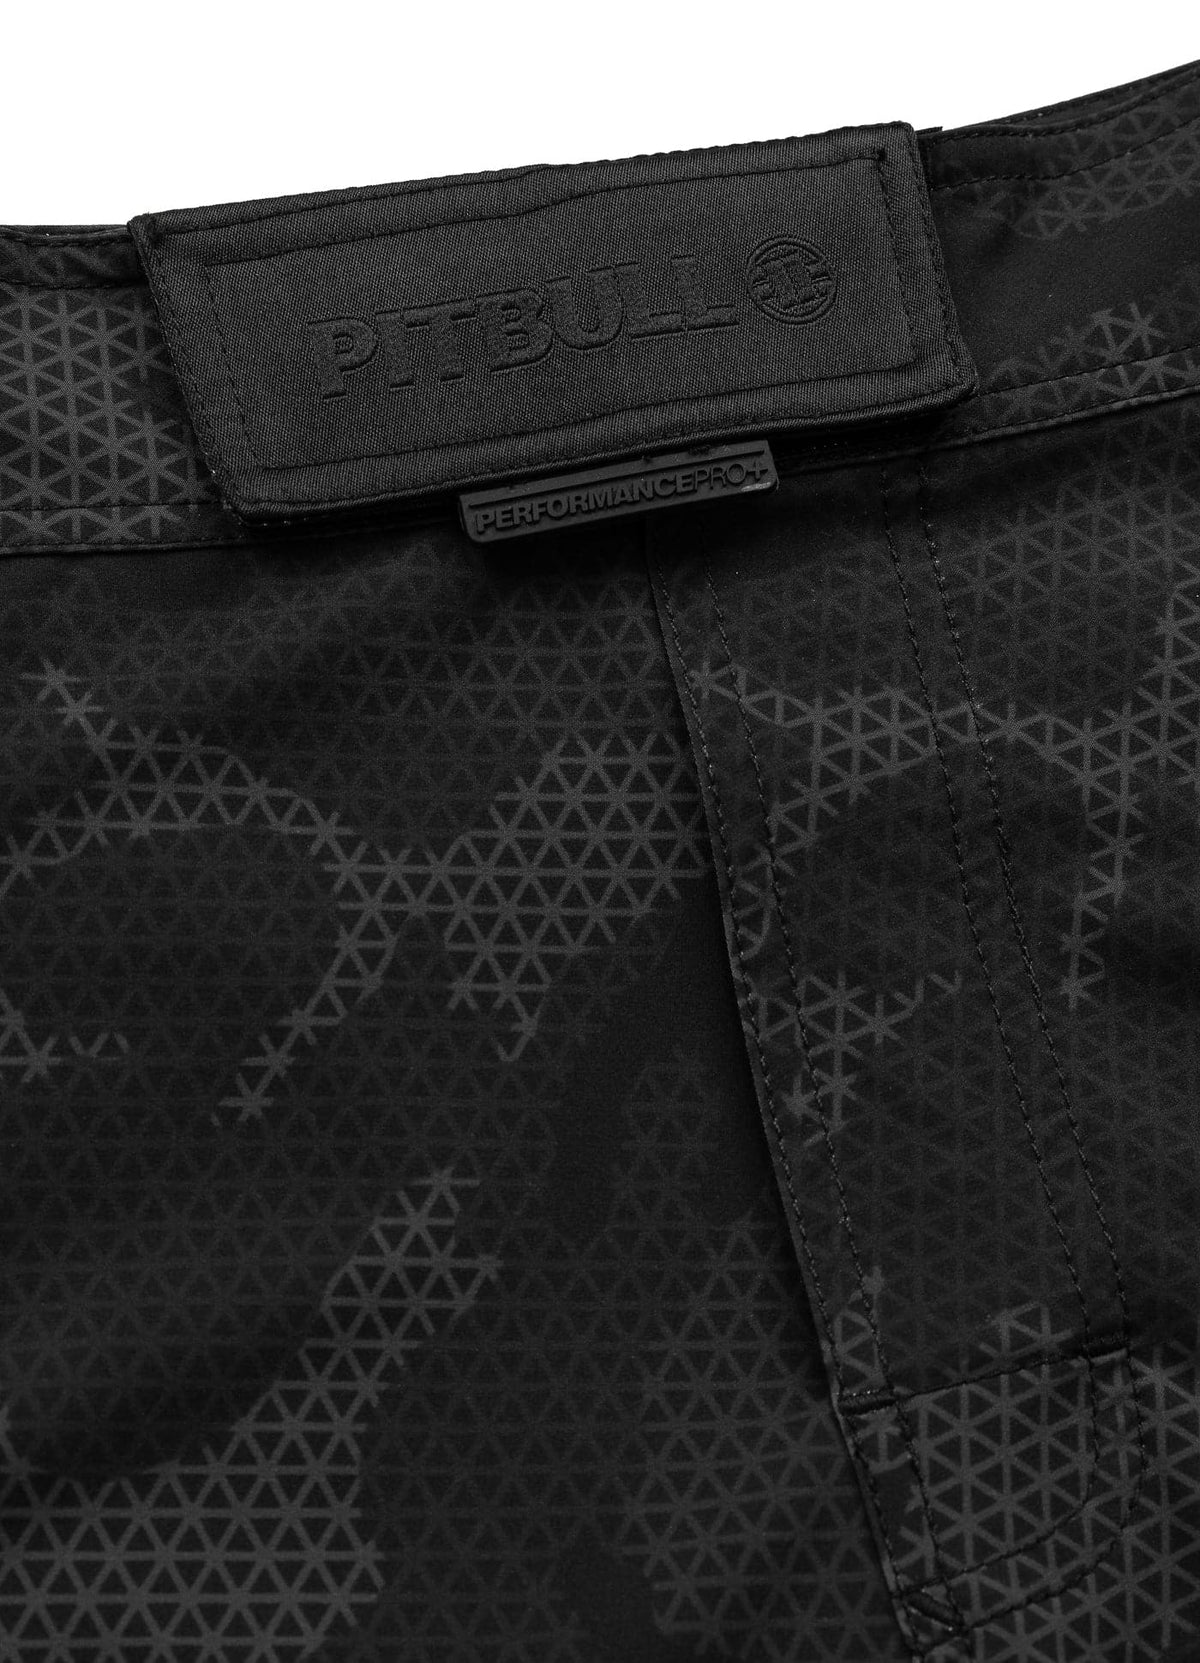 NET CAMO 2 All Black Camo Grappling Shorts 1 - Pitbull West Coast International Store 